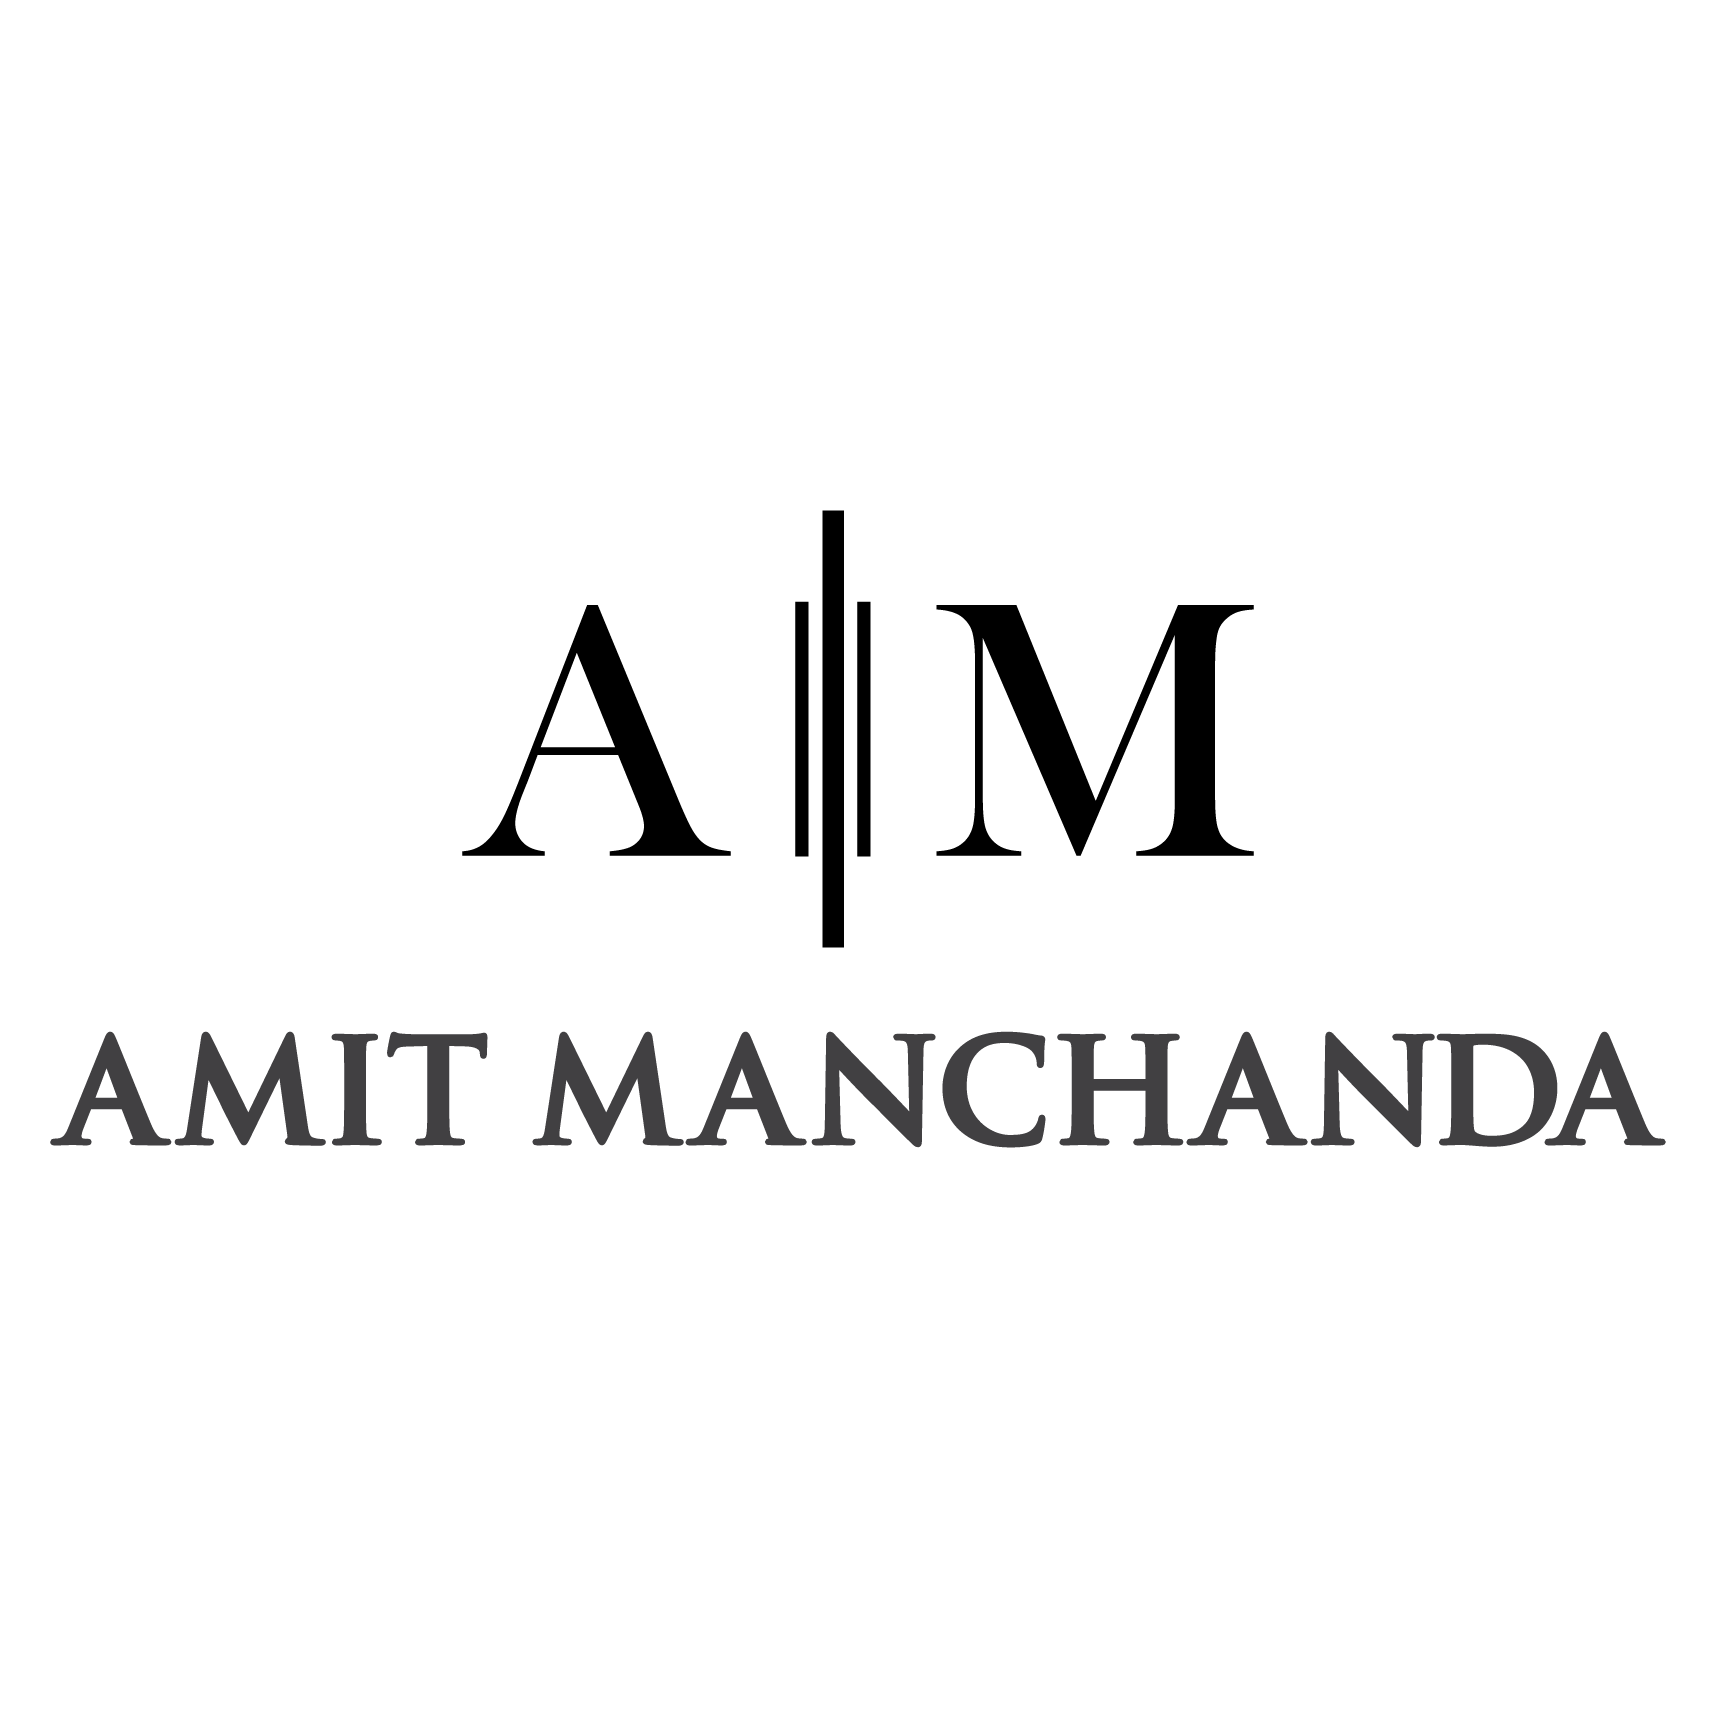 Amit Manchanda - Keller Williams Realty Logo